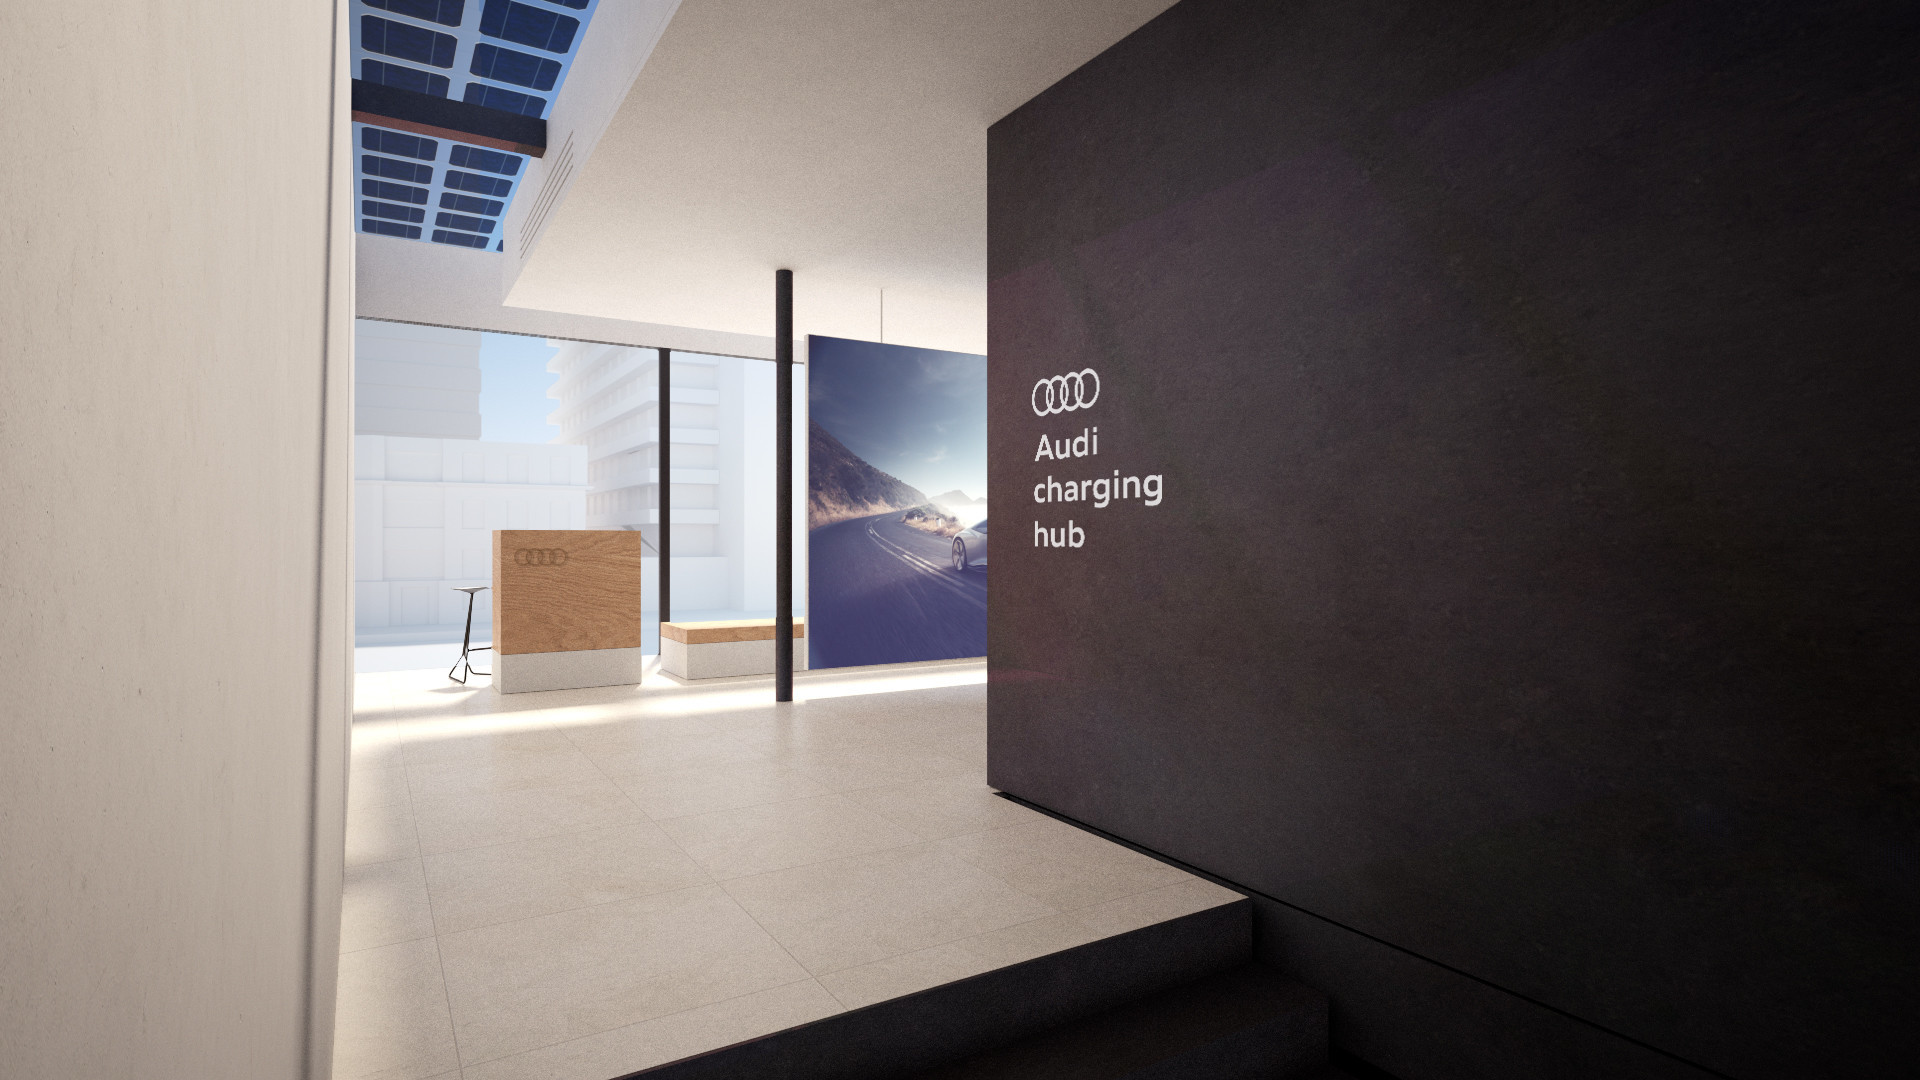 Audi charging hub concept